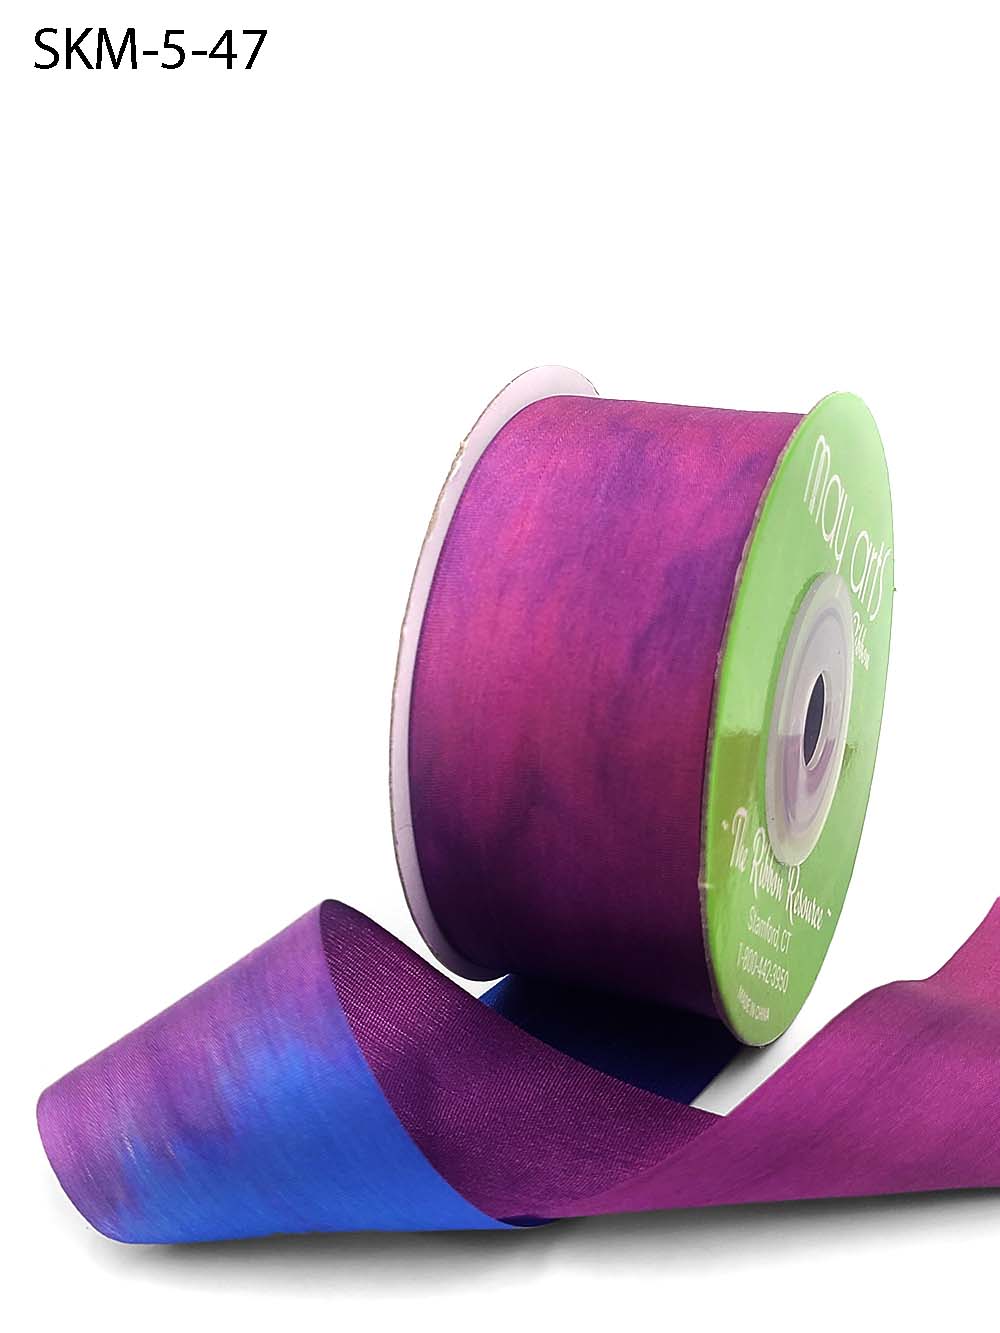 Roses Ribbon Setgibb & Hiney, Hand-dyed Silk Ribbon, 5 Colors